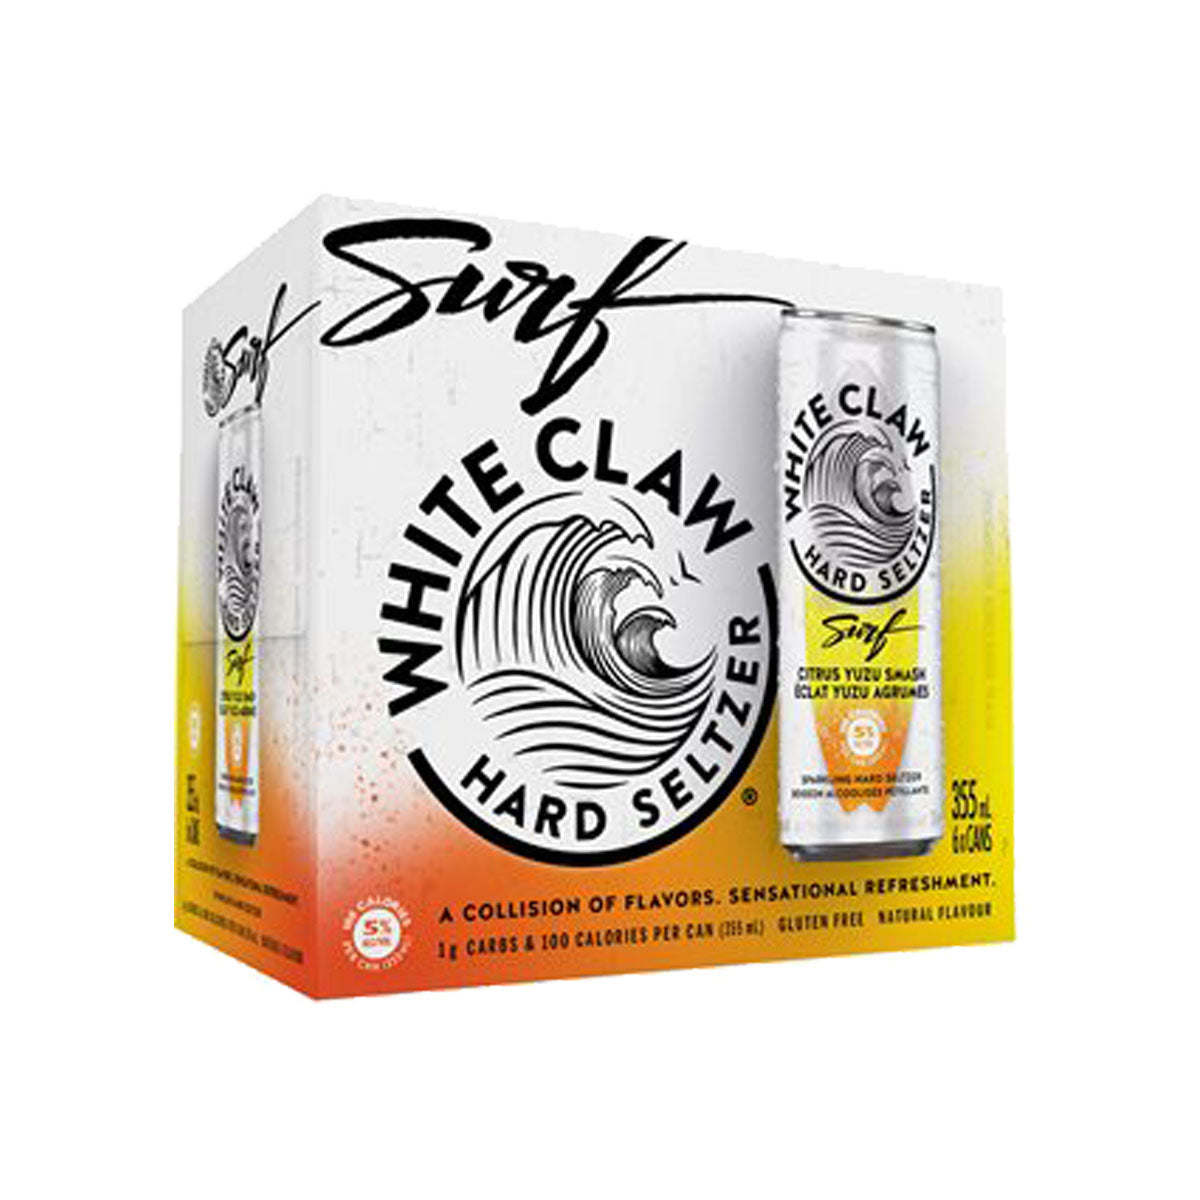 TAG Liquor Stores BC - White Claw Citrus Yuzu Smash 6 Pack Cans